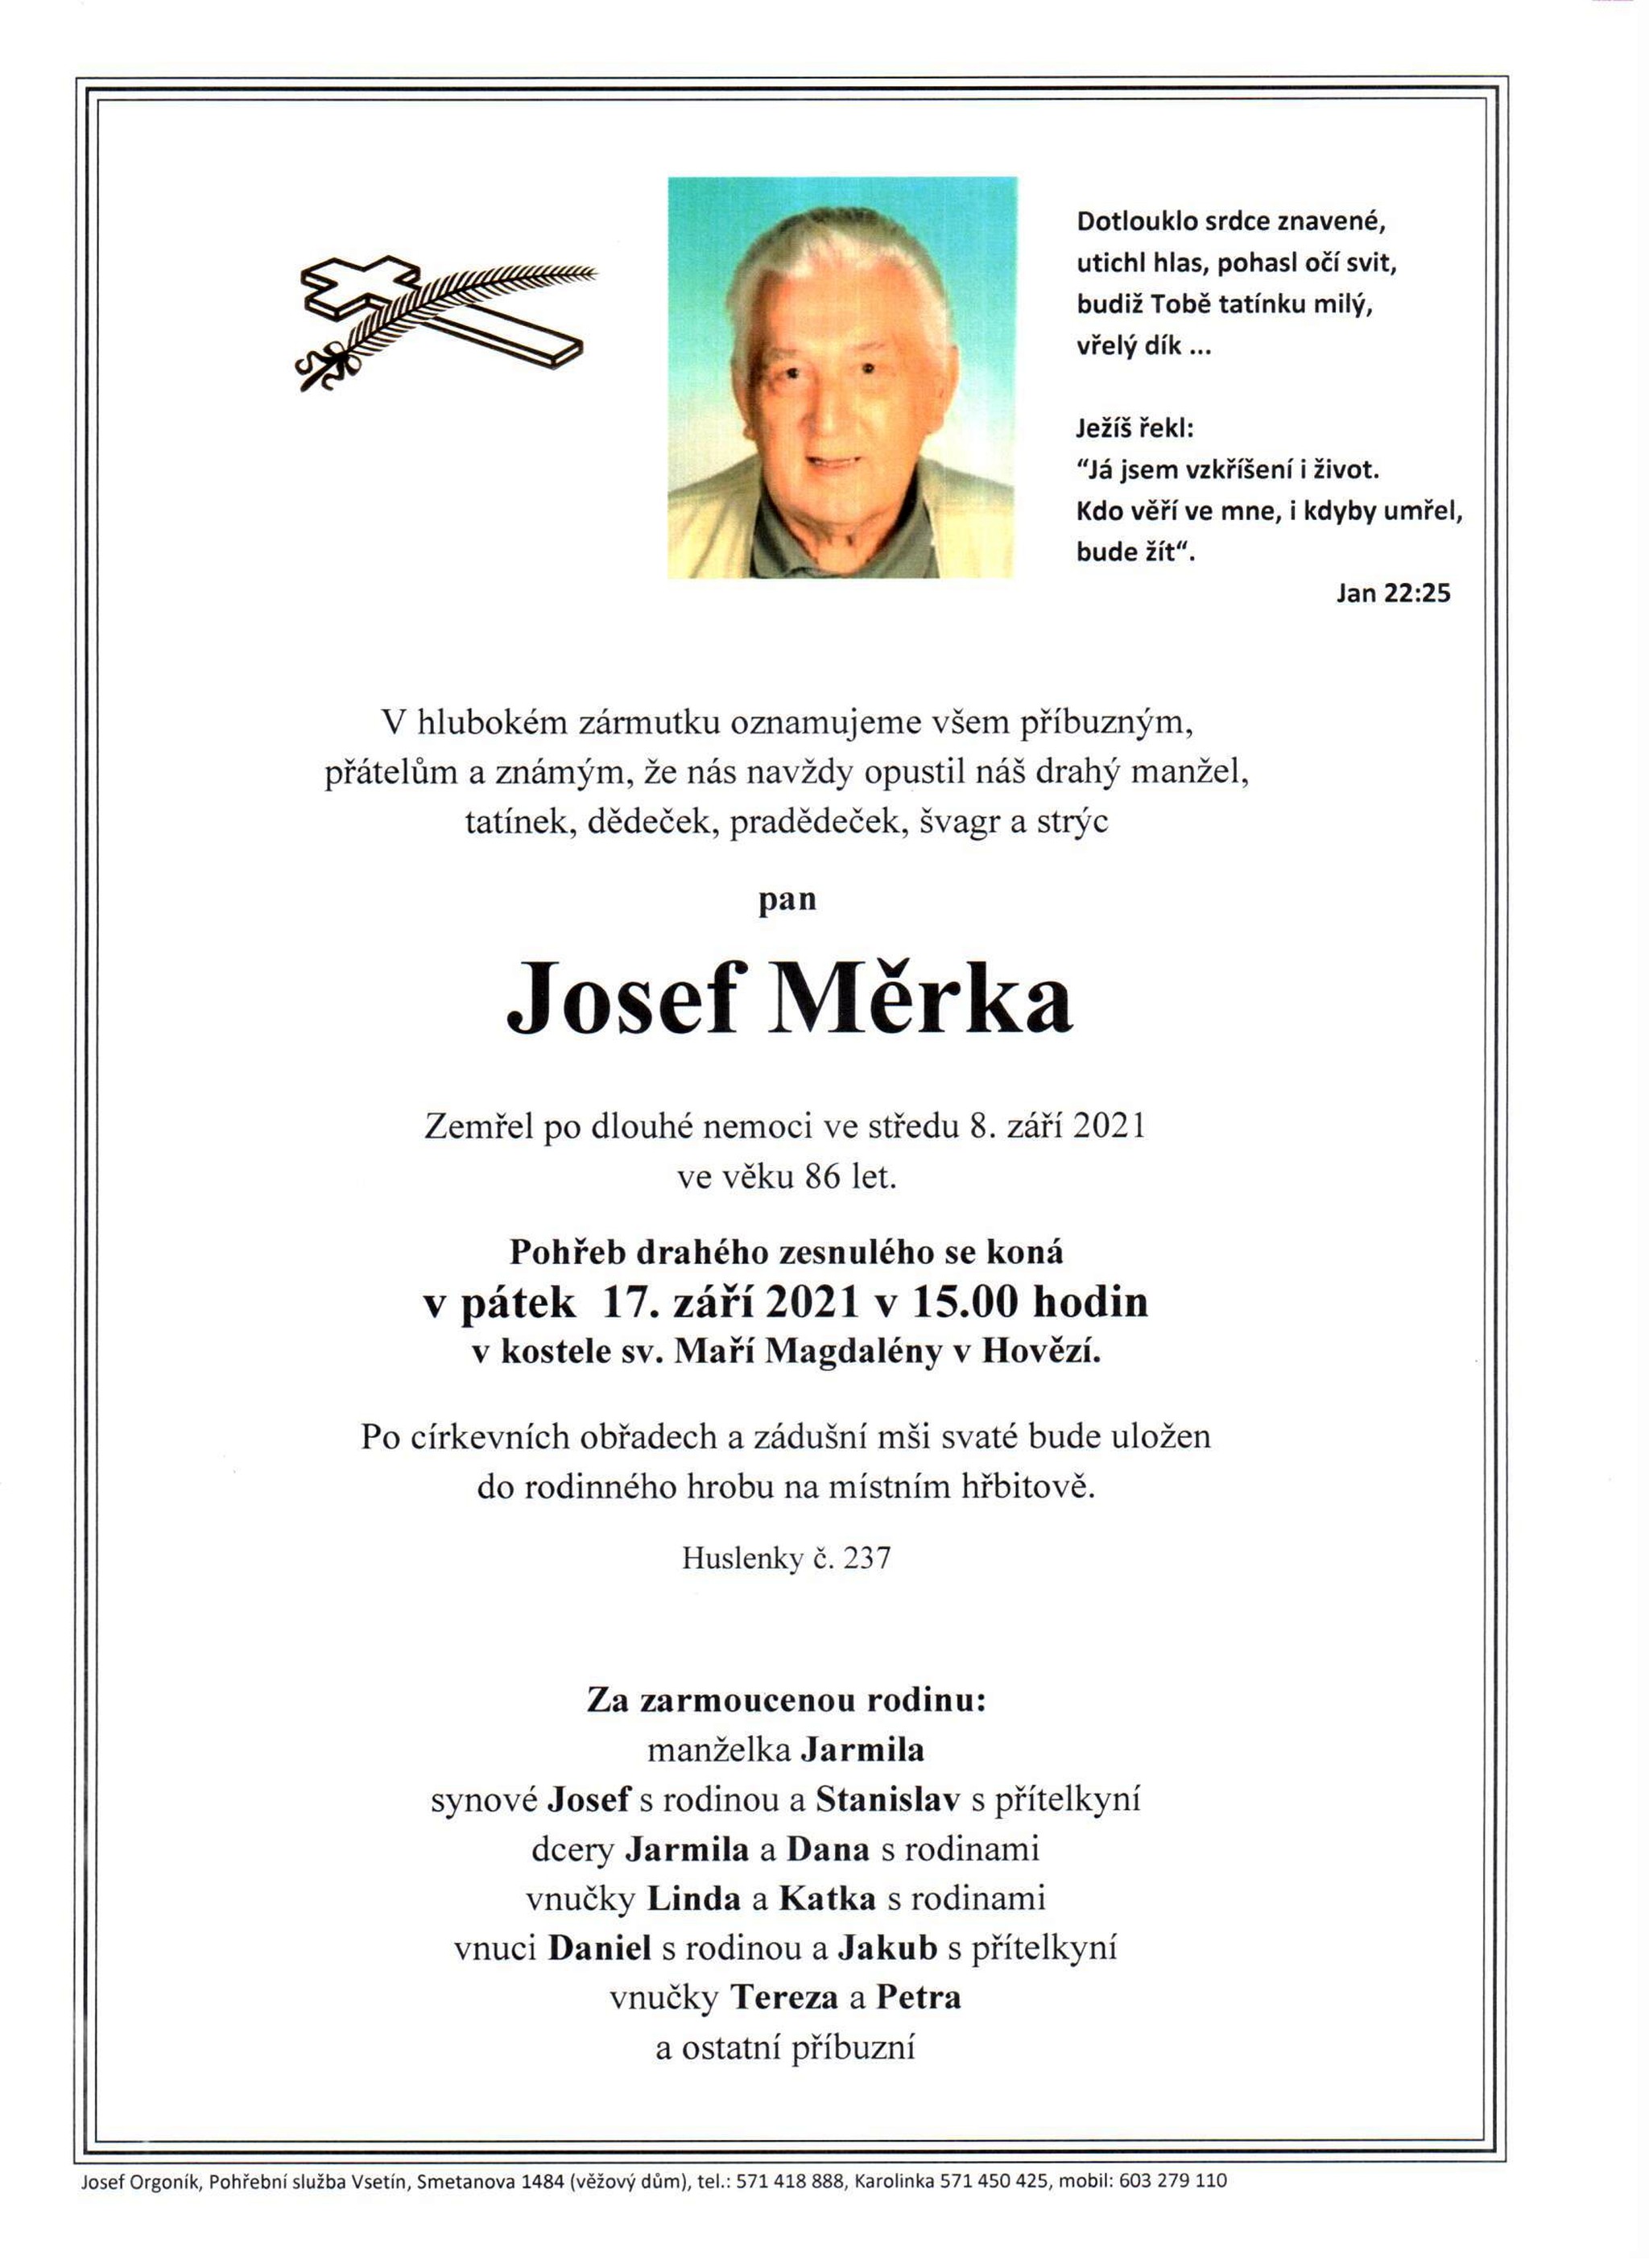 Josef Měrka